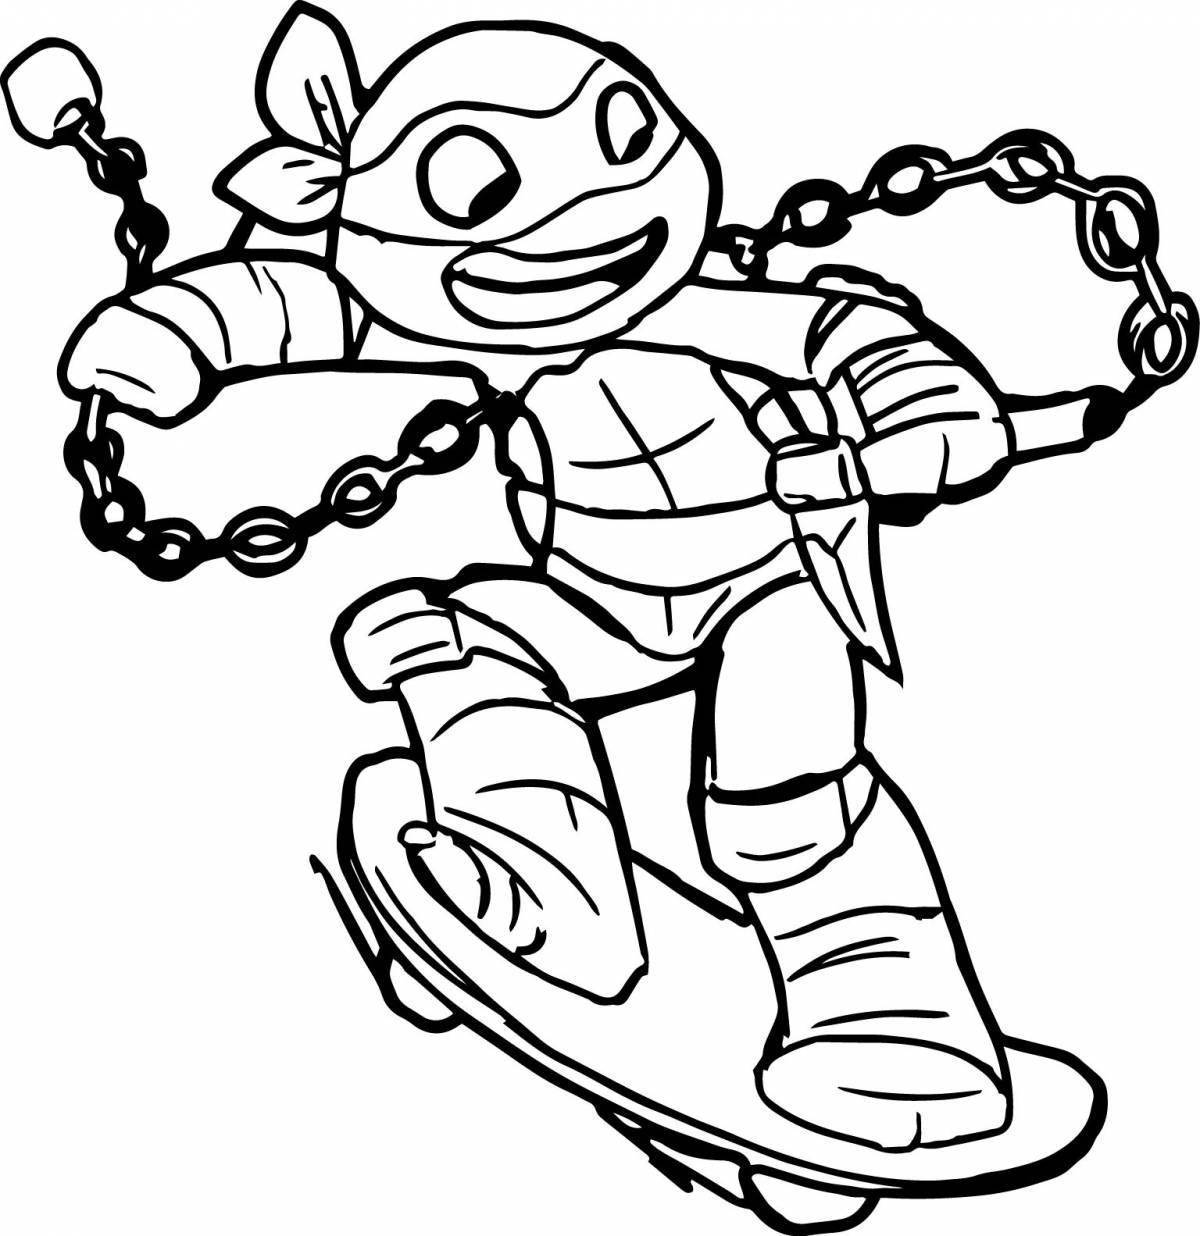 Amazing Michelangelo Teenage Mutant Ninja Turtles coloring book